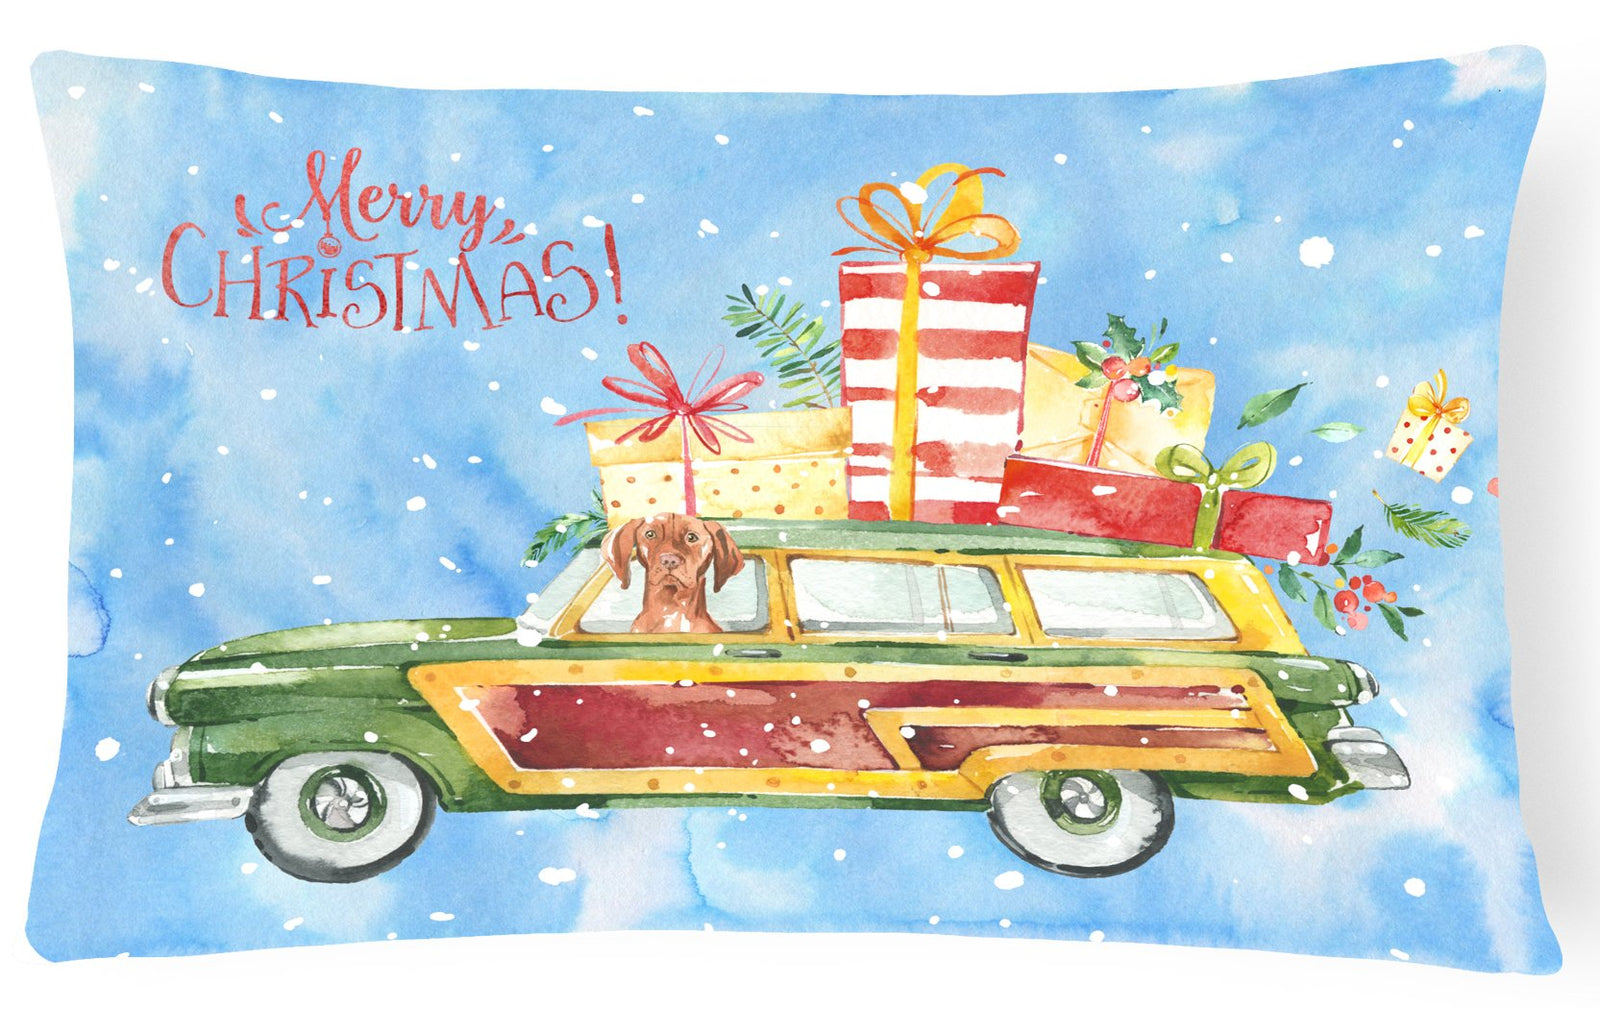 Merry Christmas Vizsla Canvas Fabric Decorative Pillow CK2408PW1216 by Caroline's Treasures